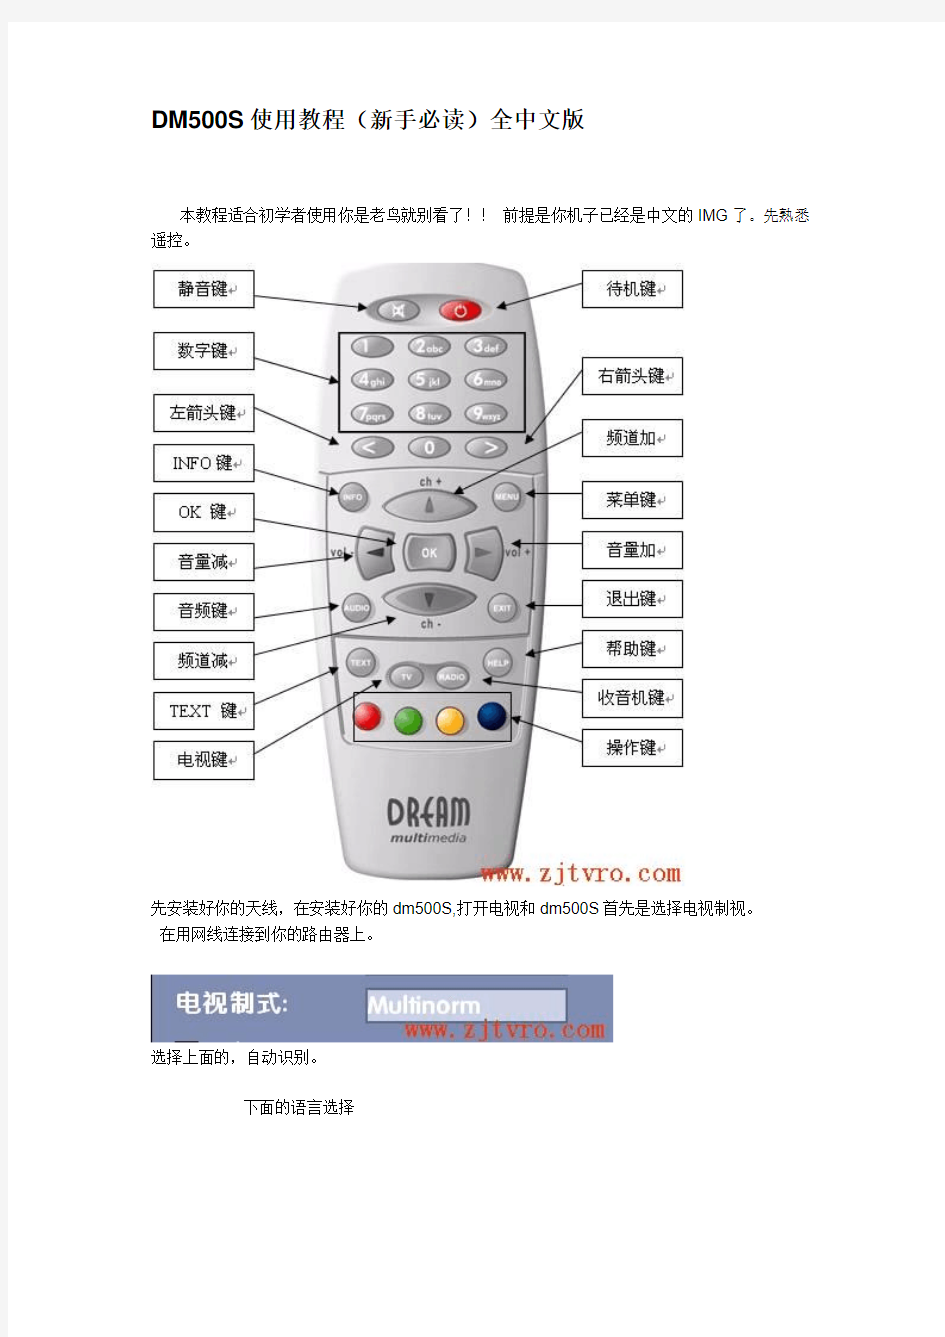 DM500S使用教程(新手必读)全中文版